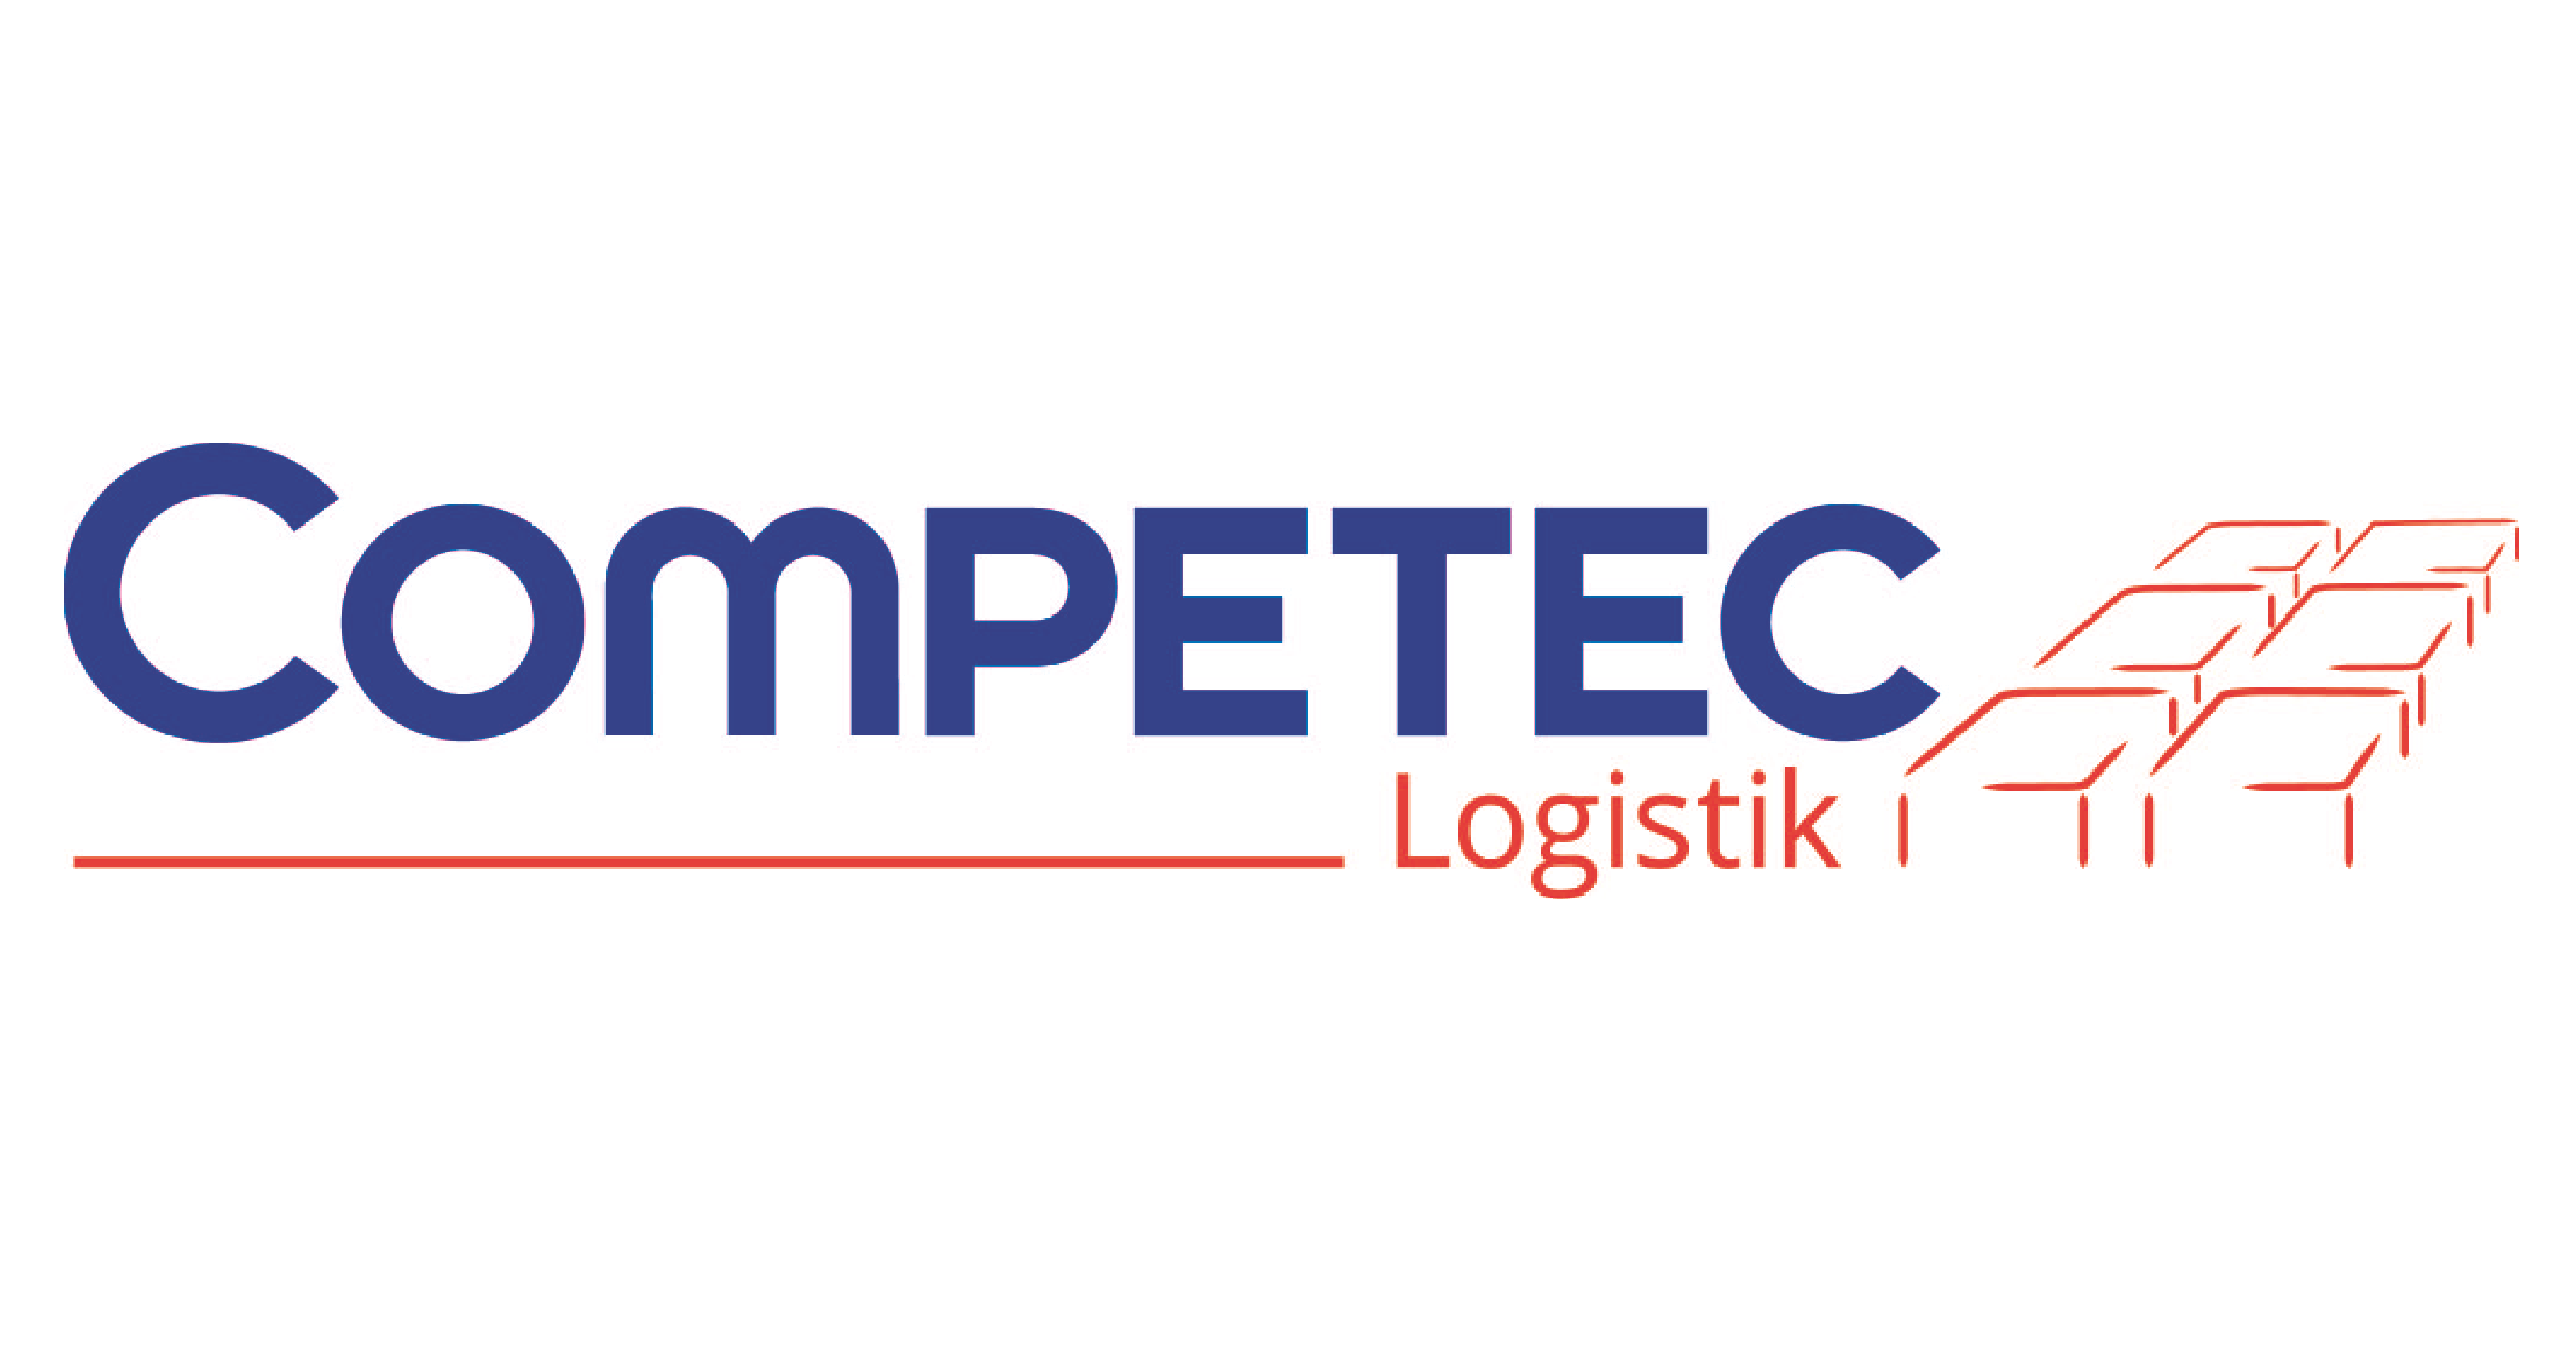 Competec Logistik AG